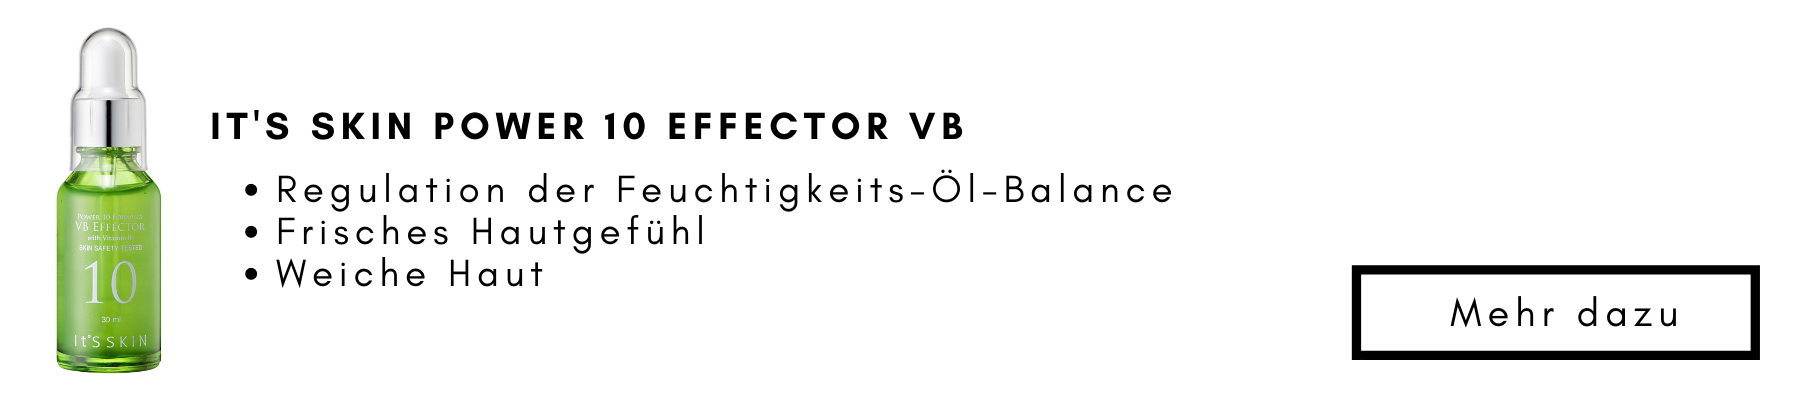 VB-Effector-Bild